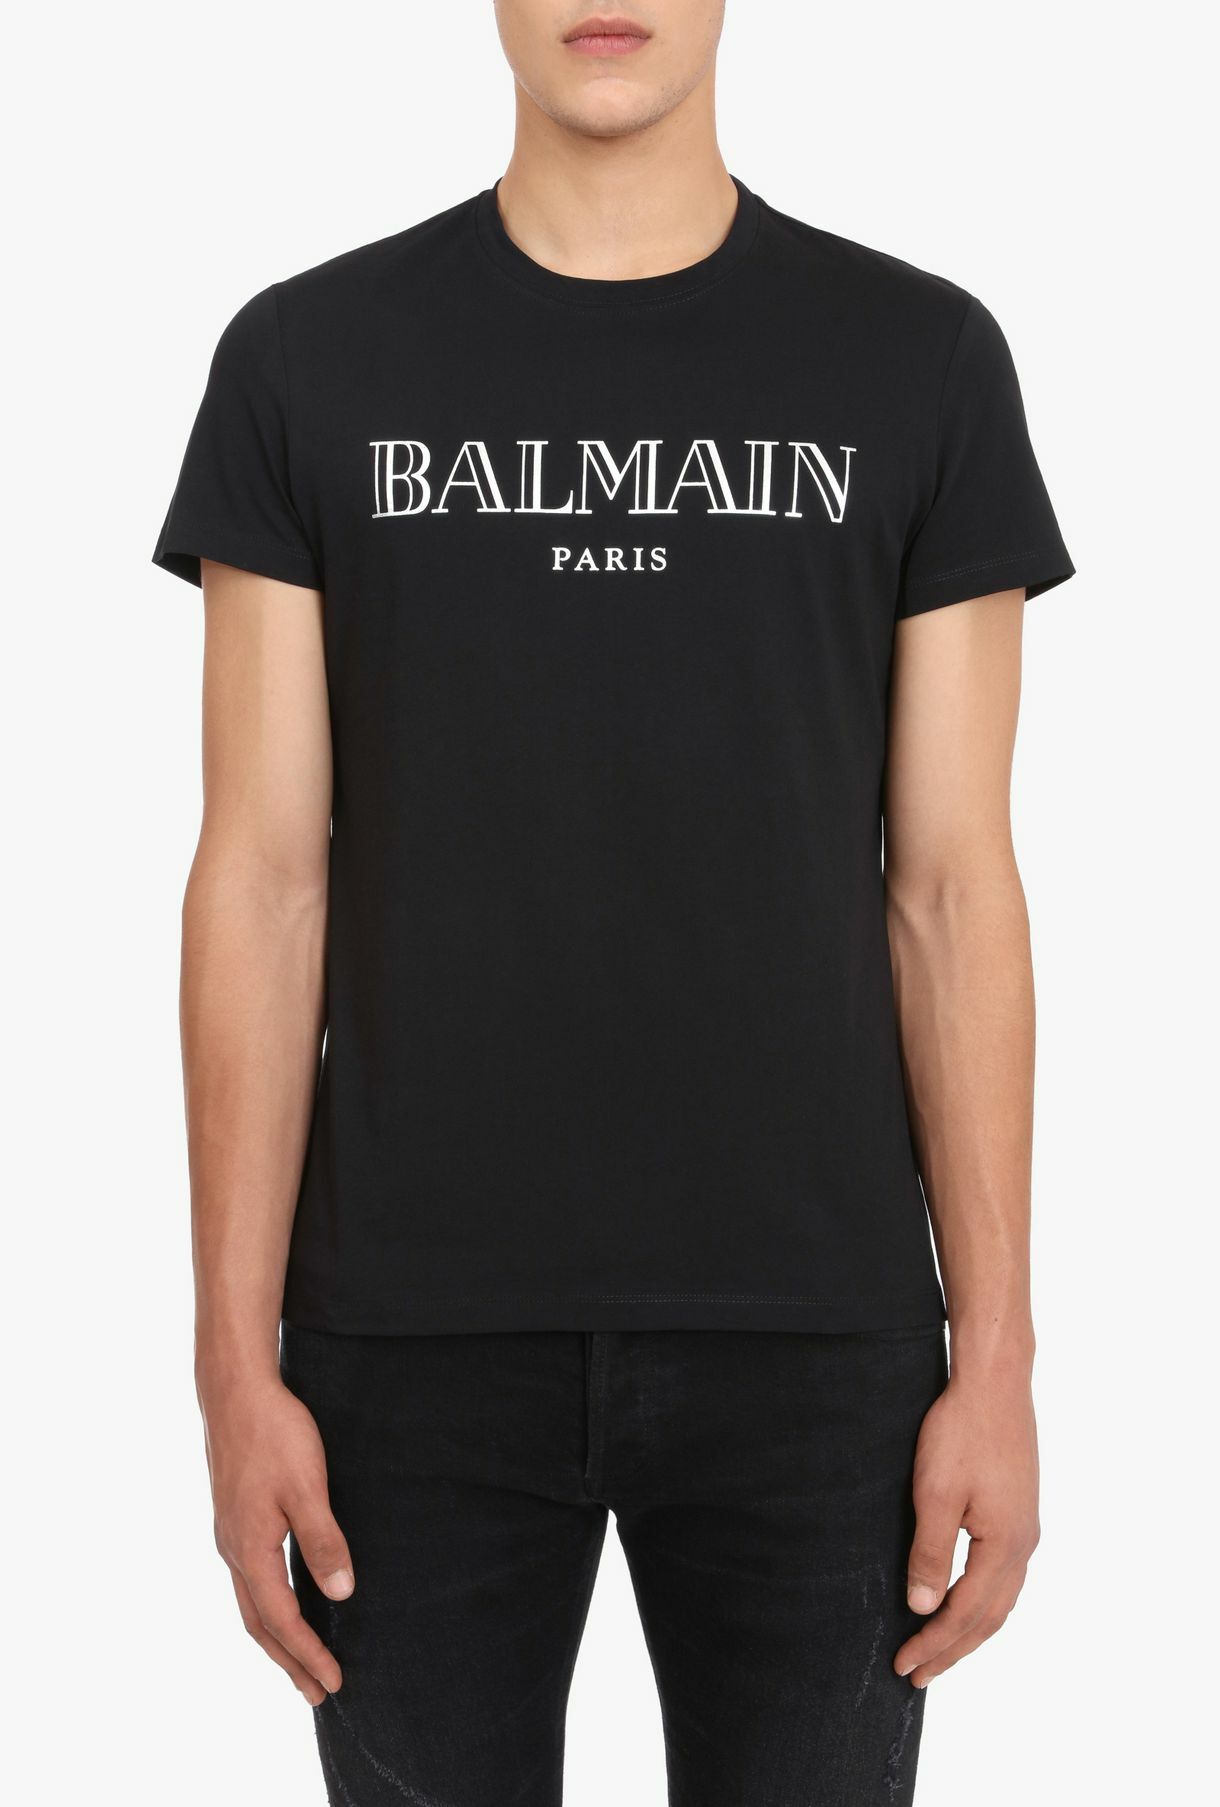 Is Balmain Luxury Brand | Paul Smith